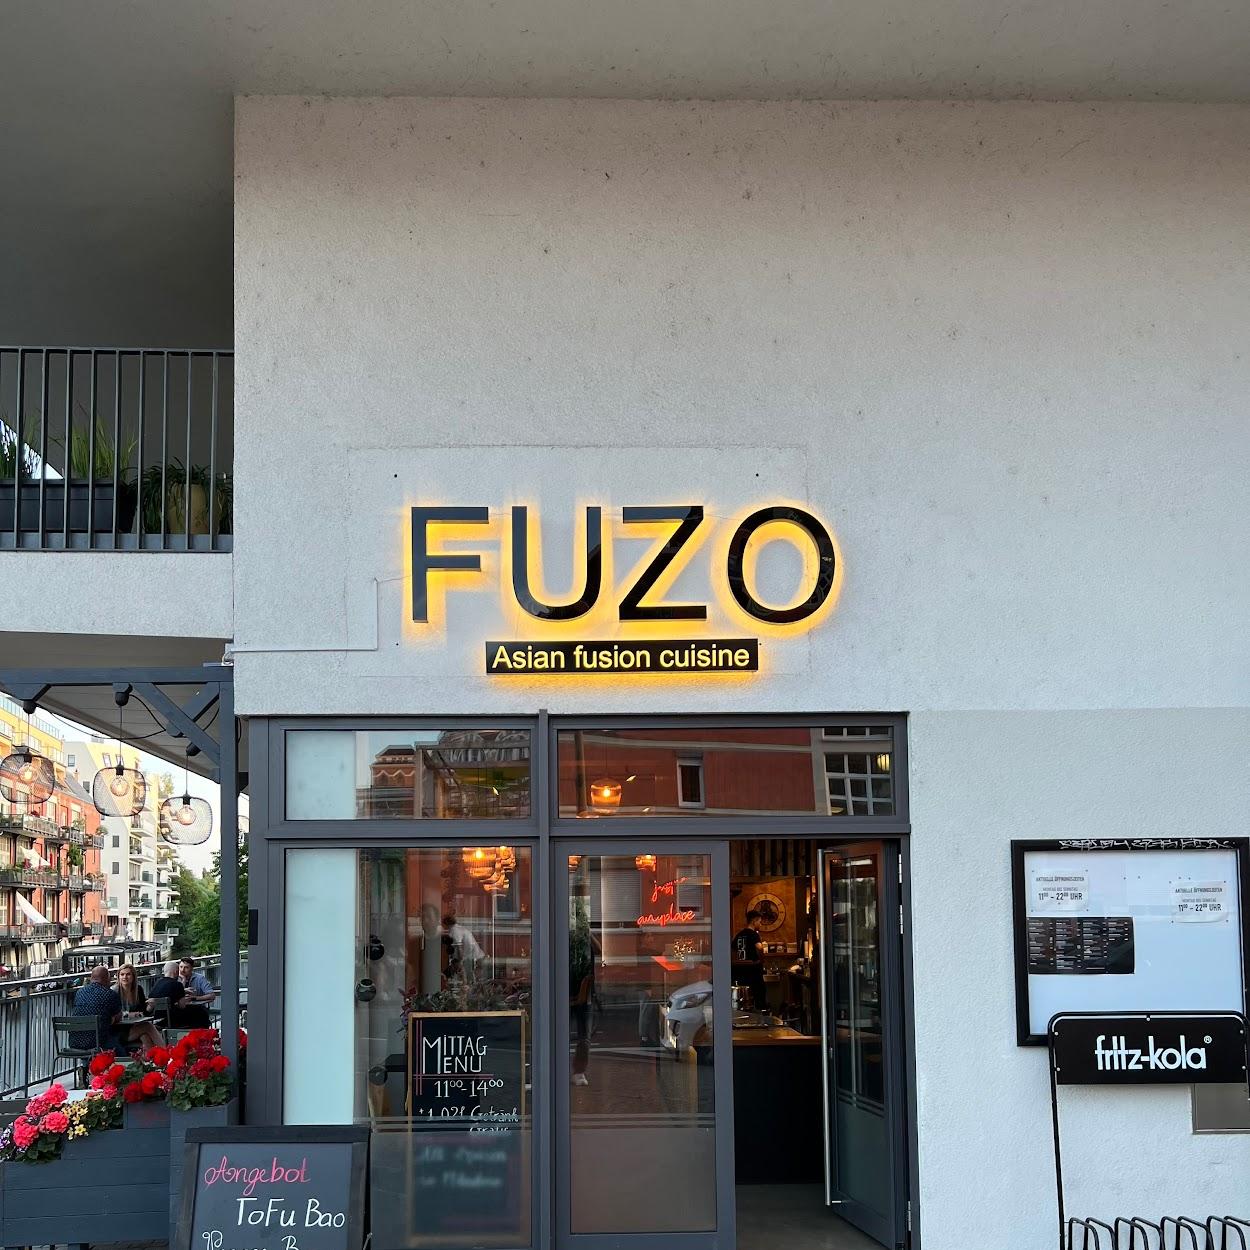 Restaurant "Restaurant Fuzo" in Leipzig